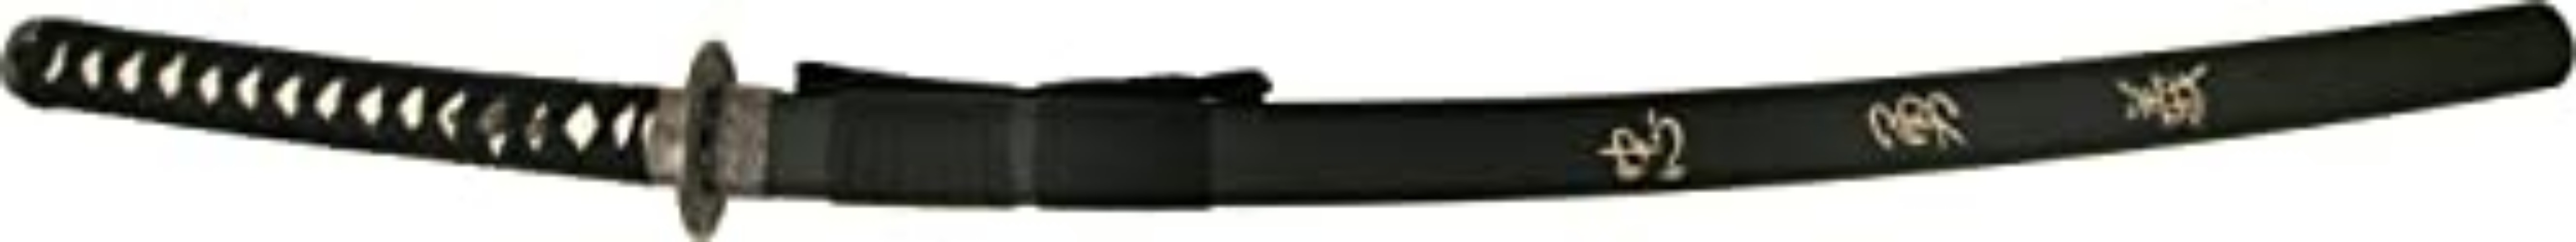 BladesUSA Katana Oriental Sword 41.5-Inch Overall - Sword